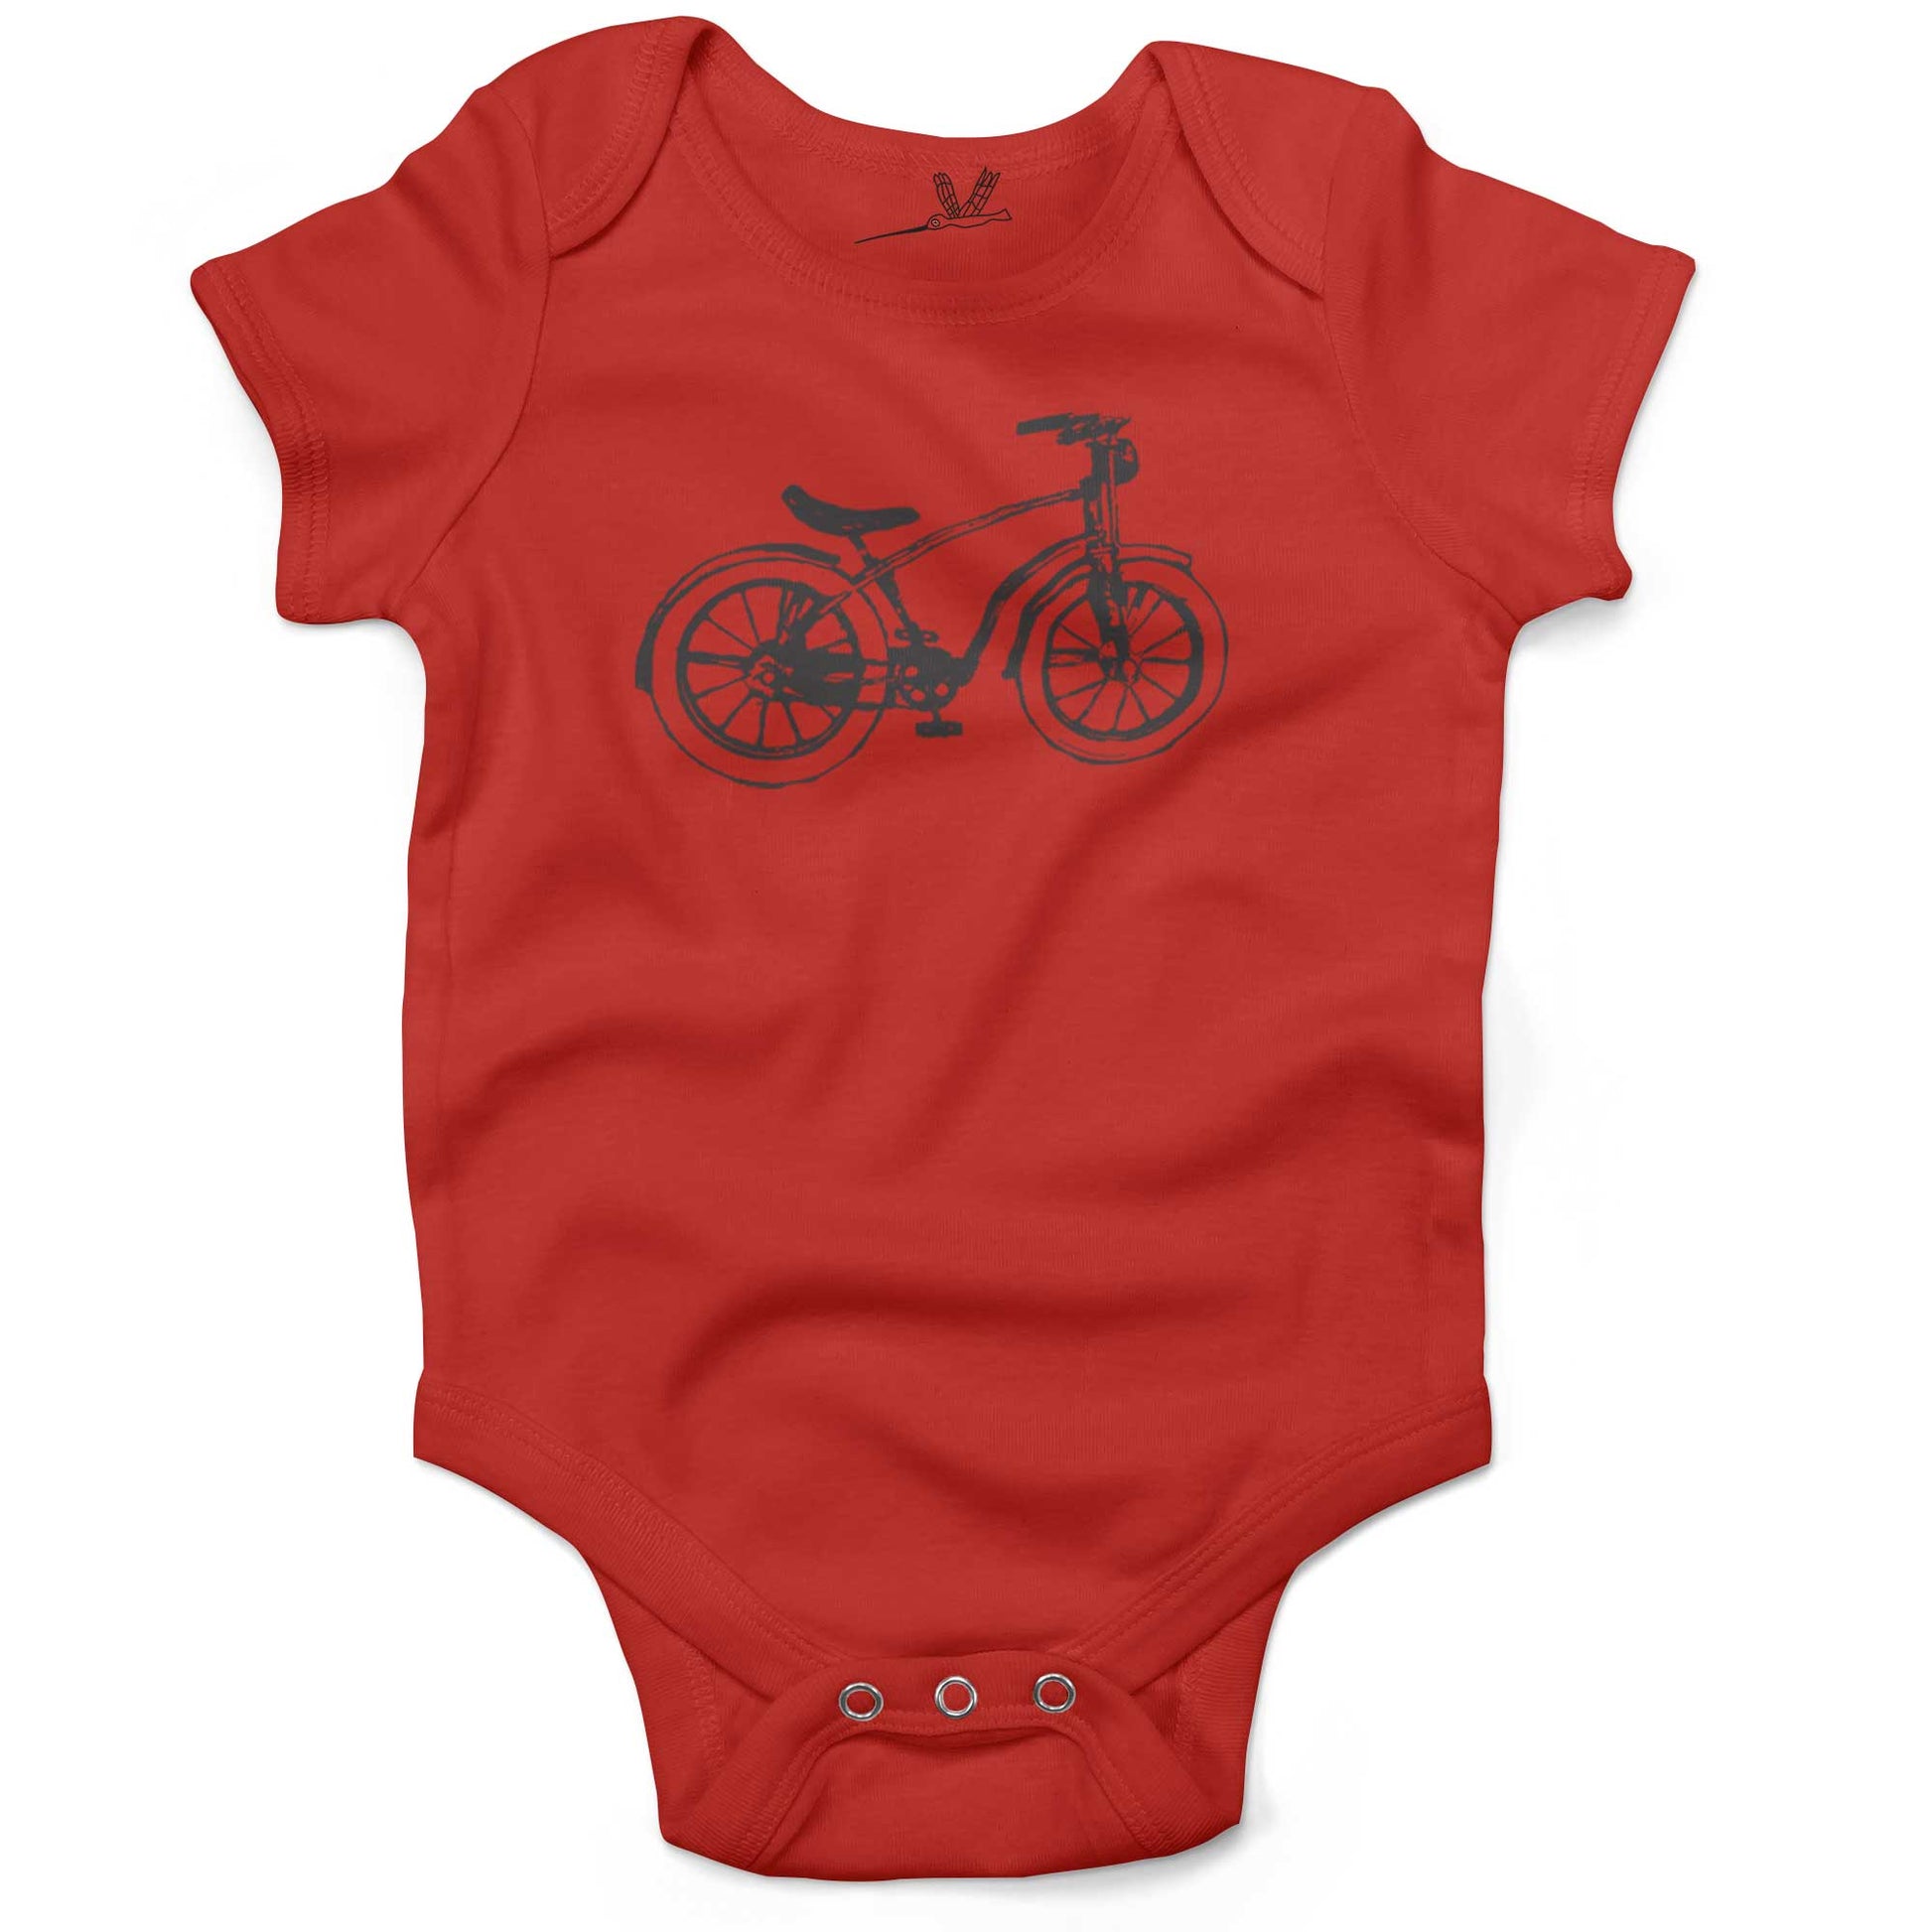 Vintage Bike Infant Bodysuit or Raglan Baby Tee-Organic Red-3-6 months